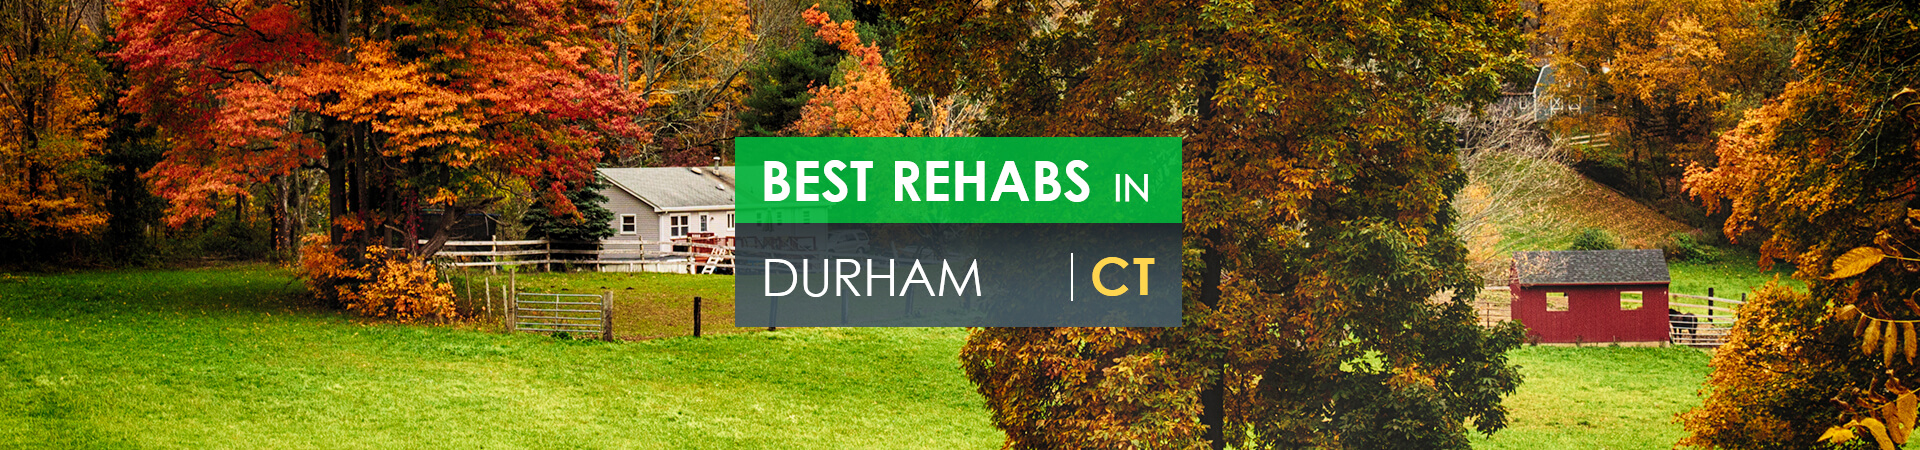 Best rehabs in Durham, CT